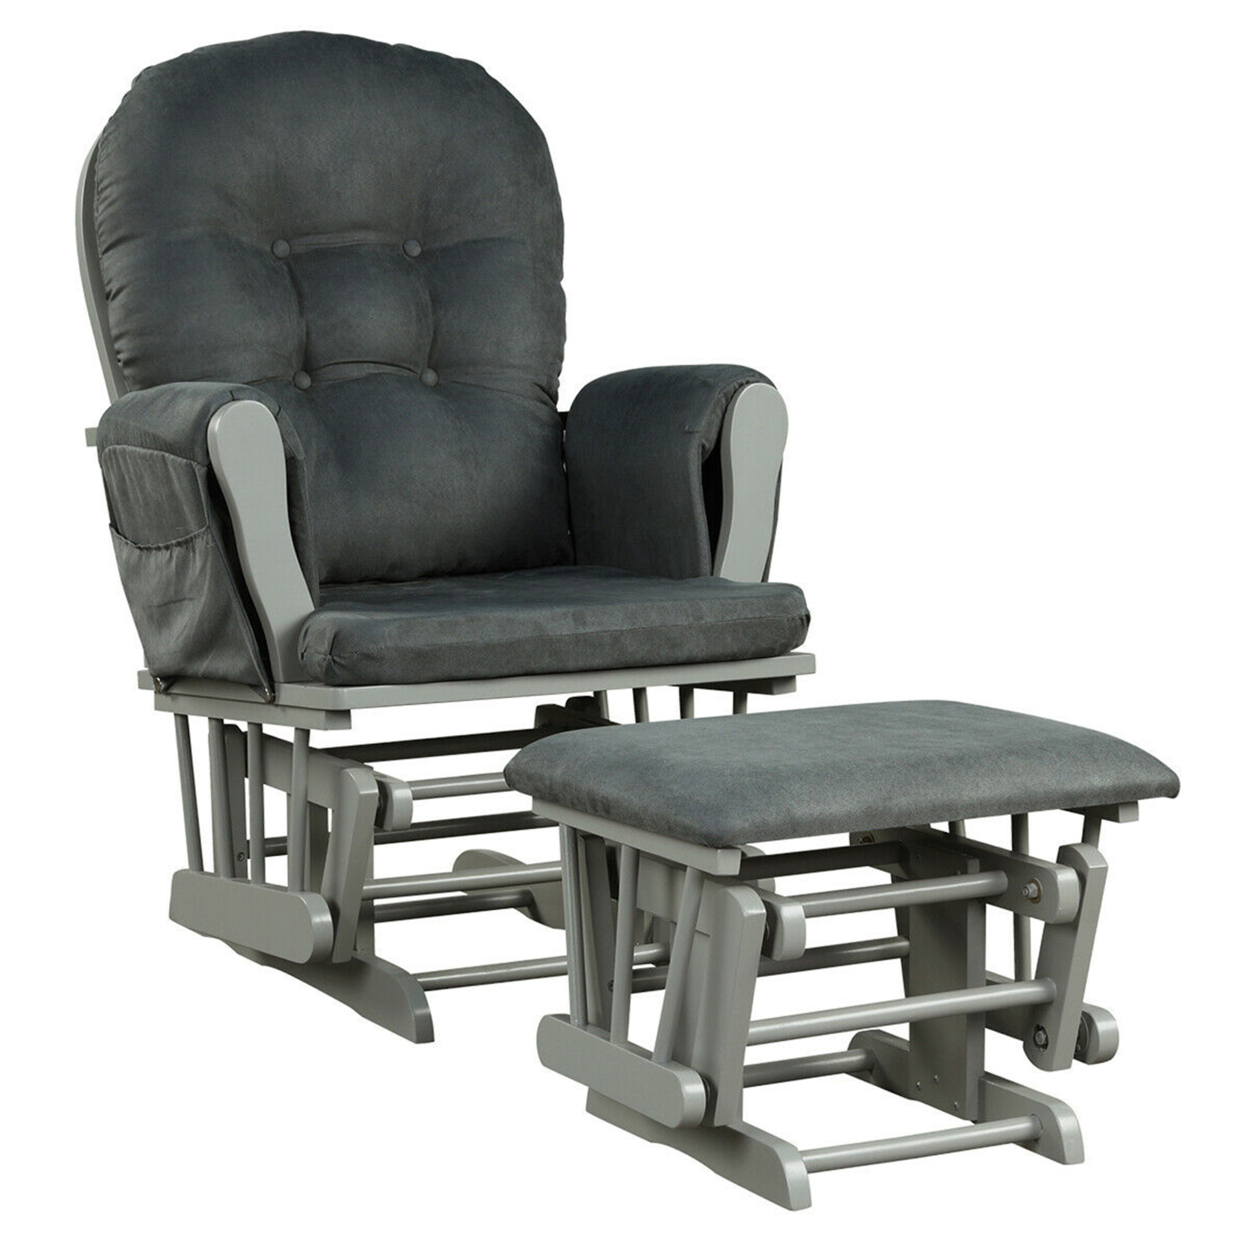 Baby Nursery Relax Rocker Rocking Chair Glider & Ottoman Set W/ Cushion - Dark Grey